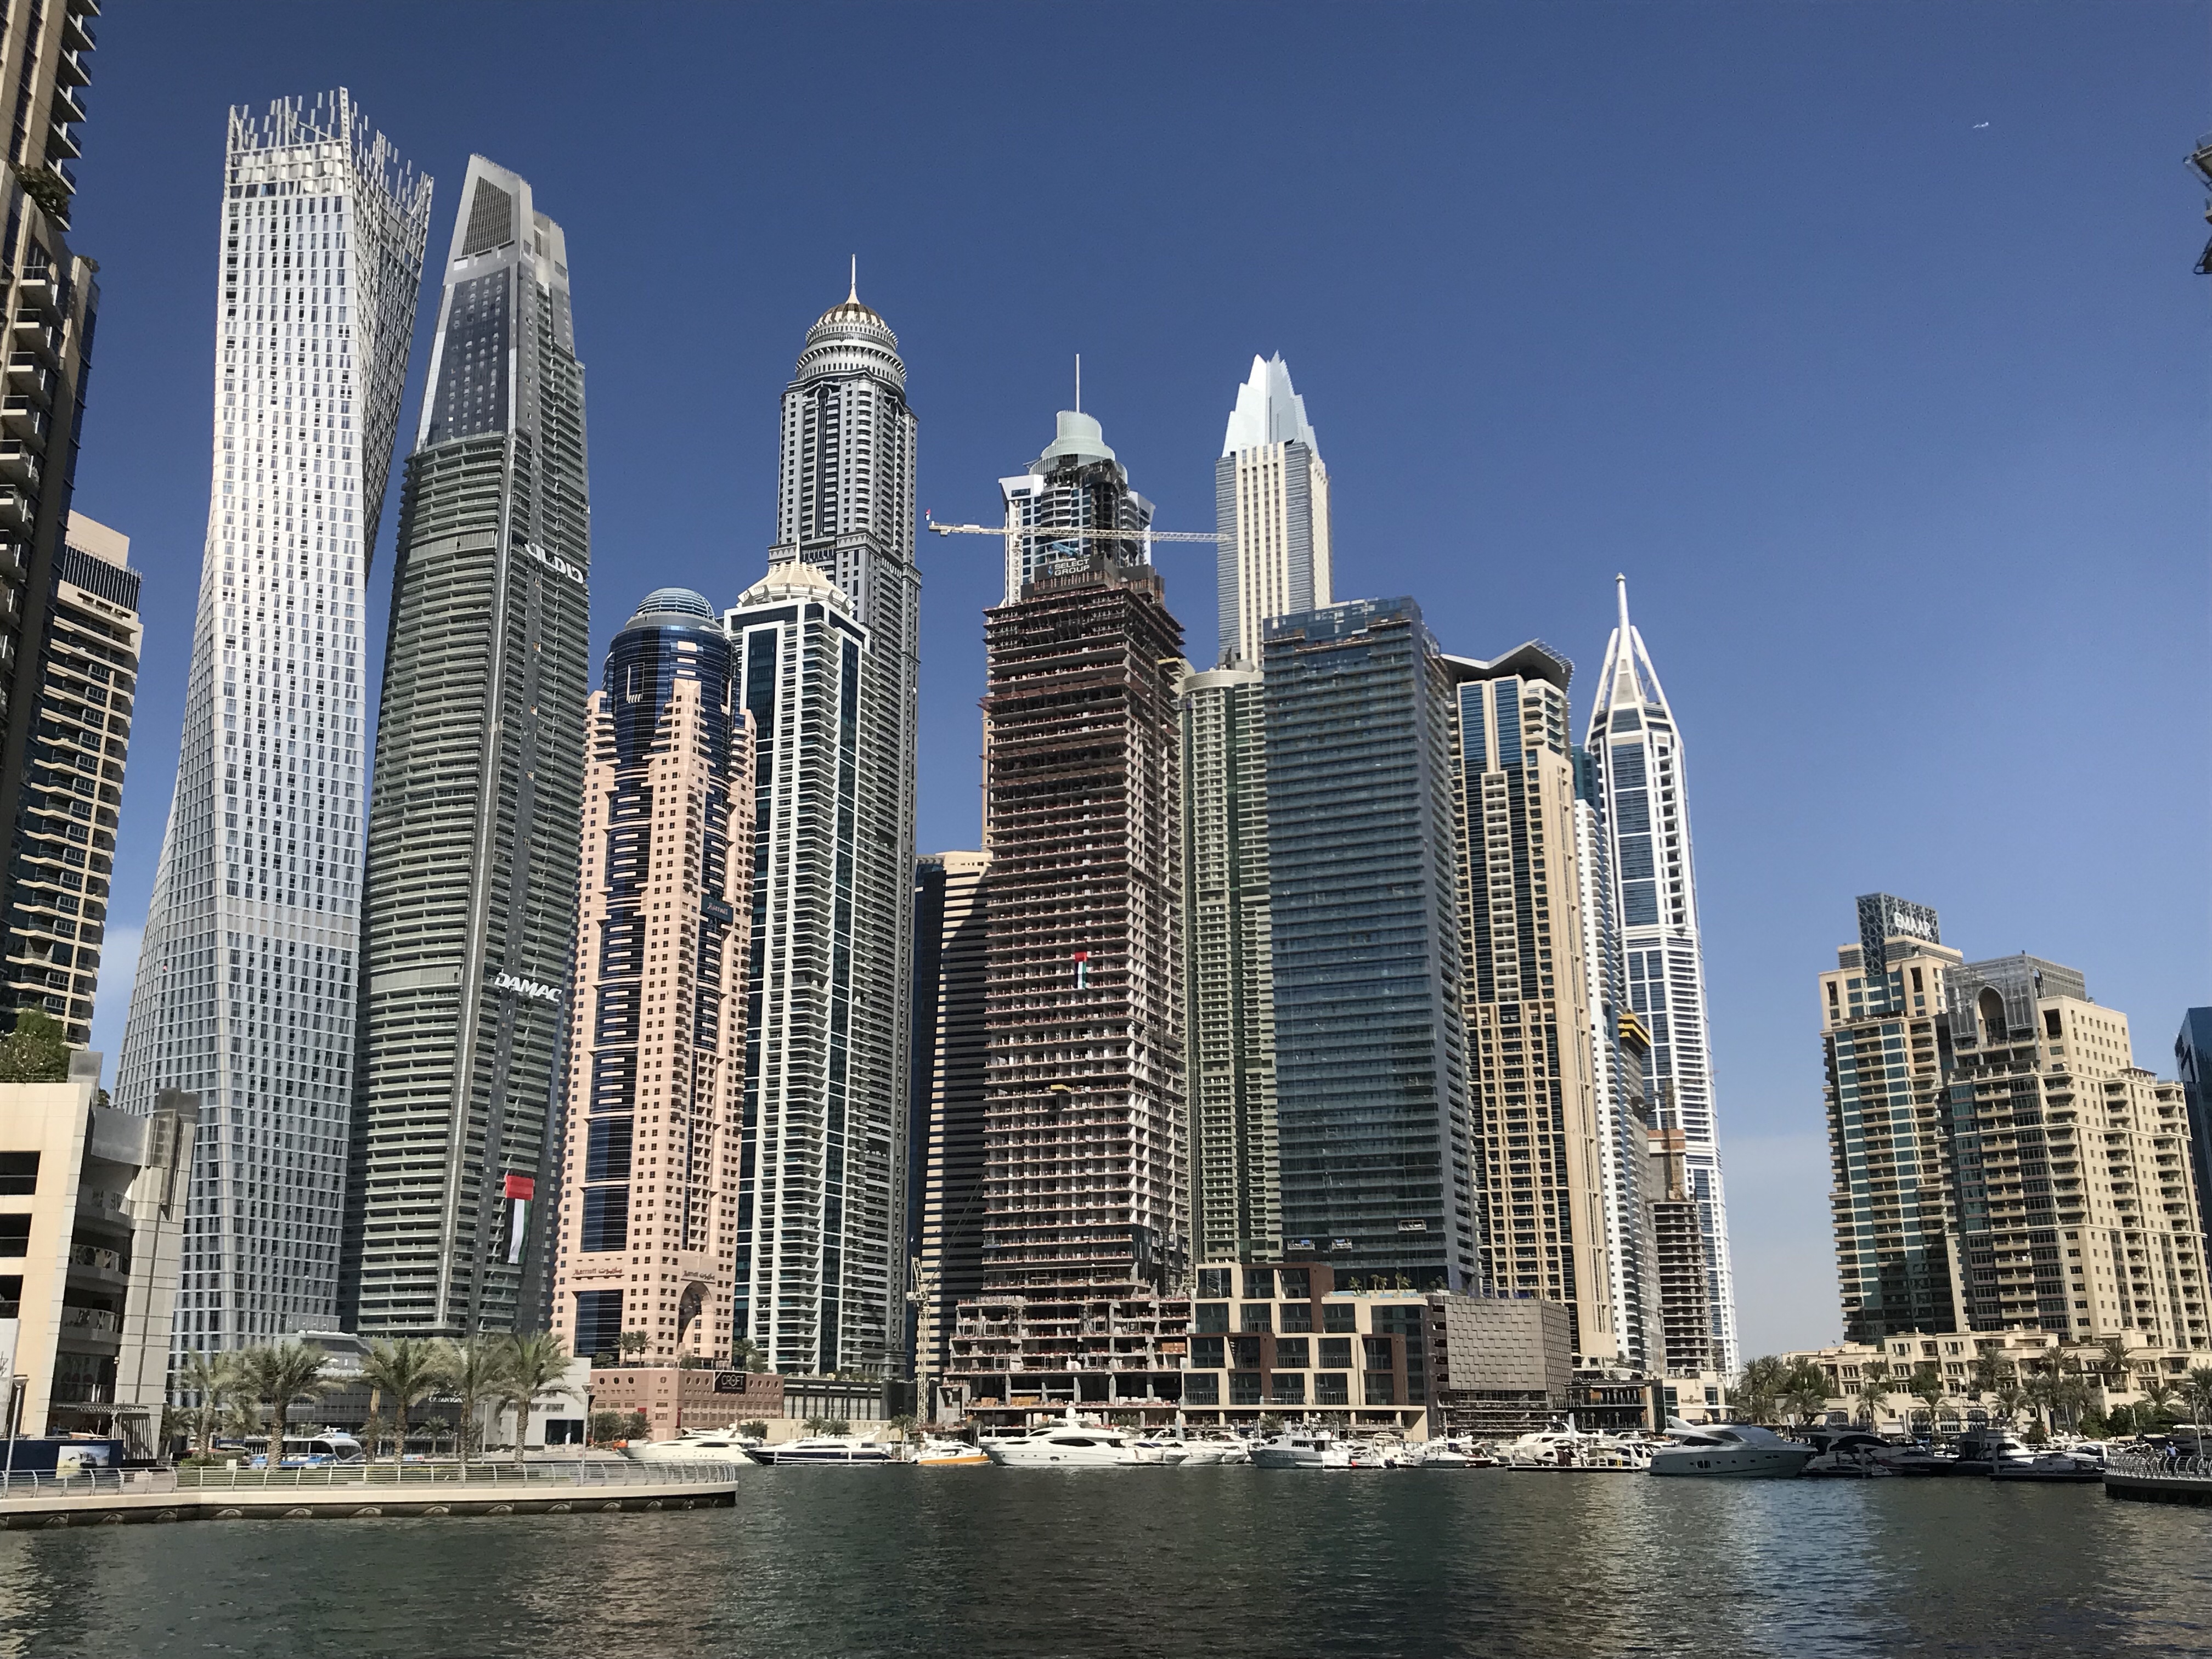 Impressive buildings around the marina in Dubai